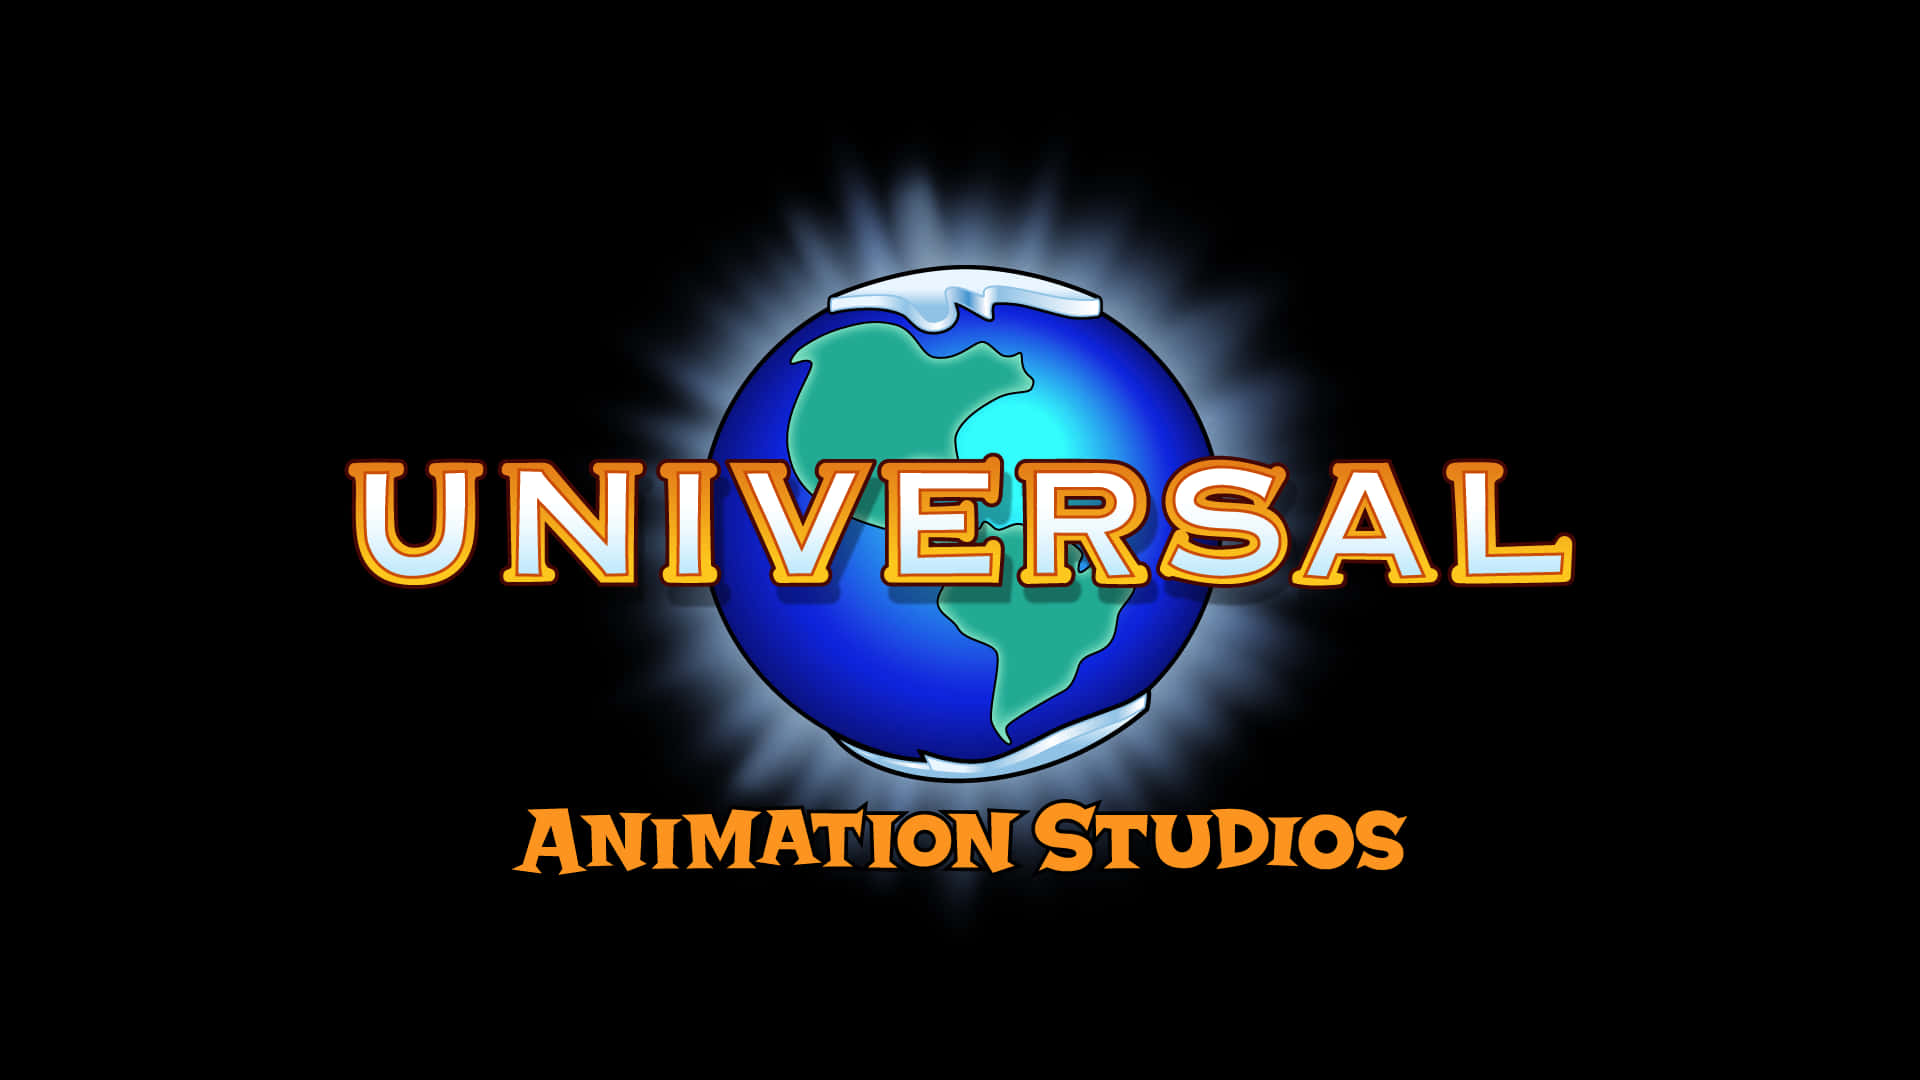 Universal Animation Studios Logo Picture